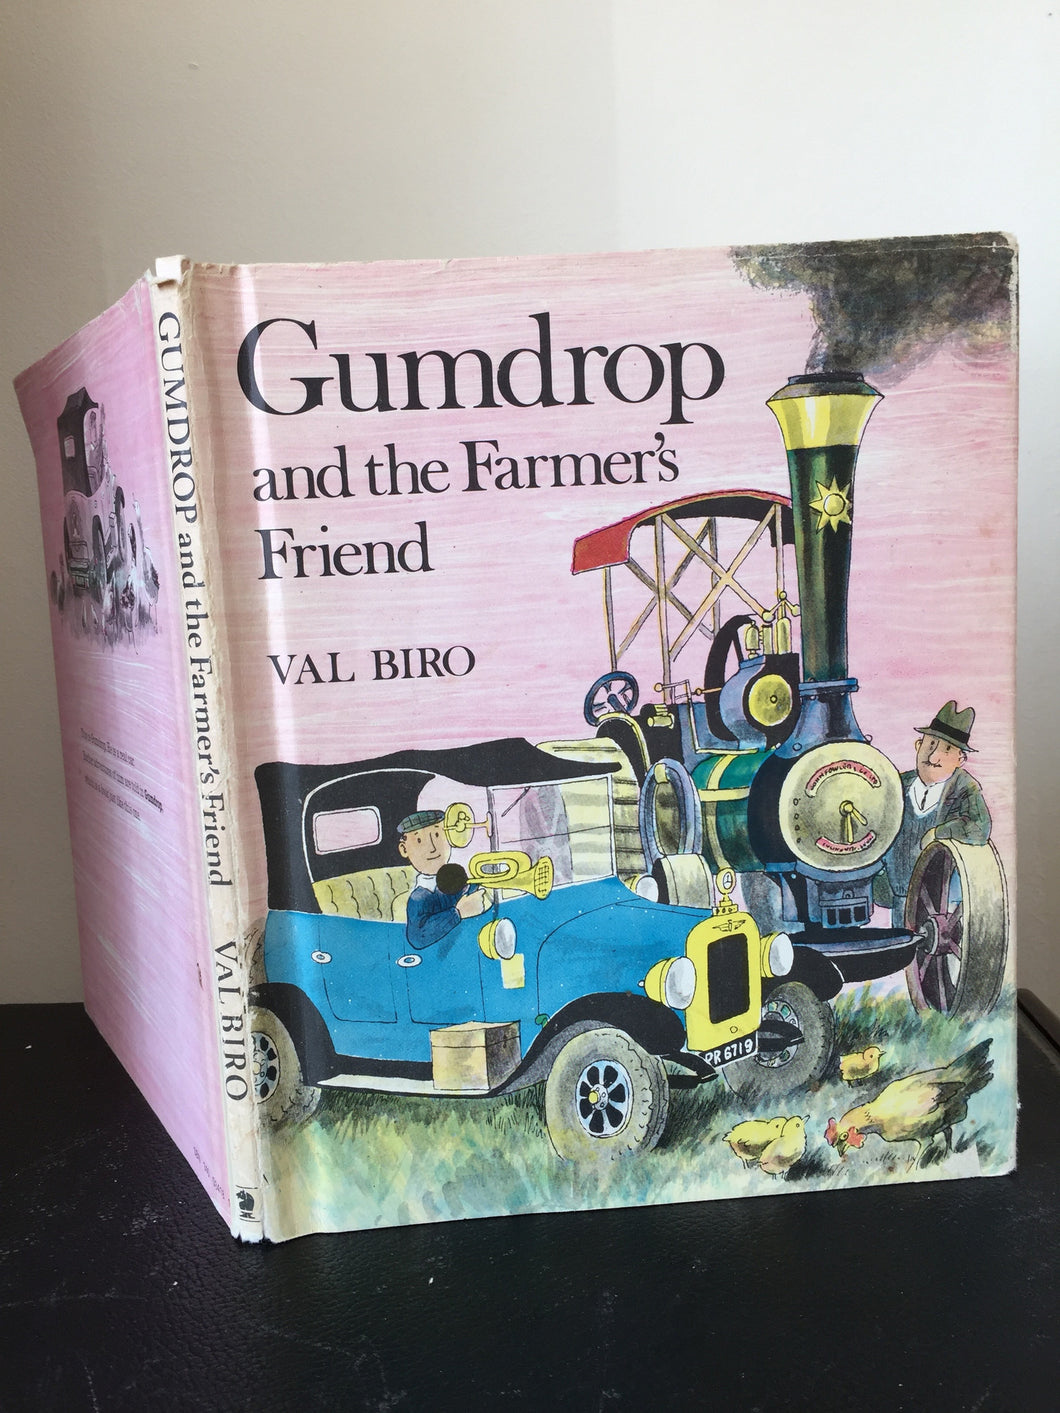 Gumdrop and the Farmer’s Friend